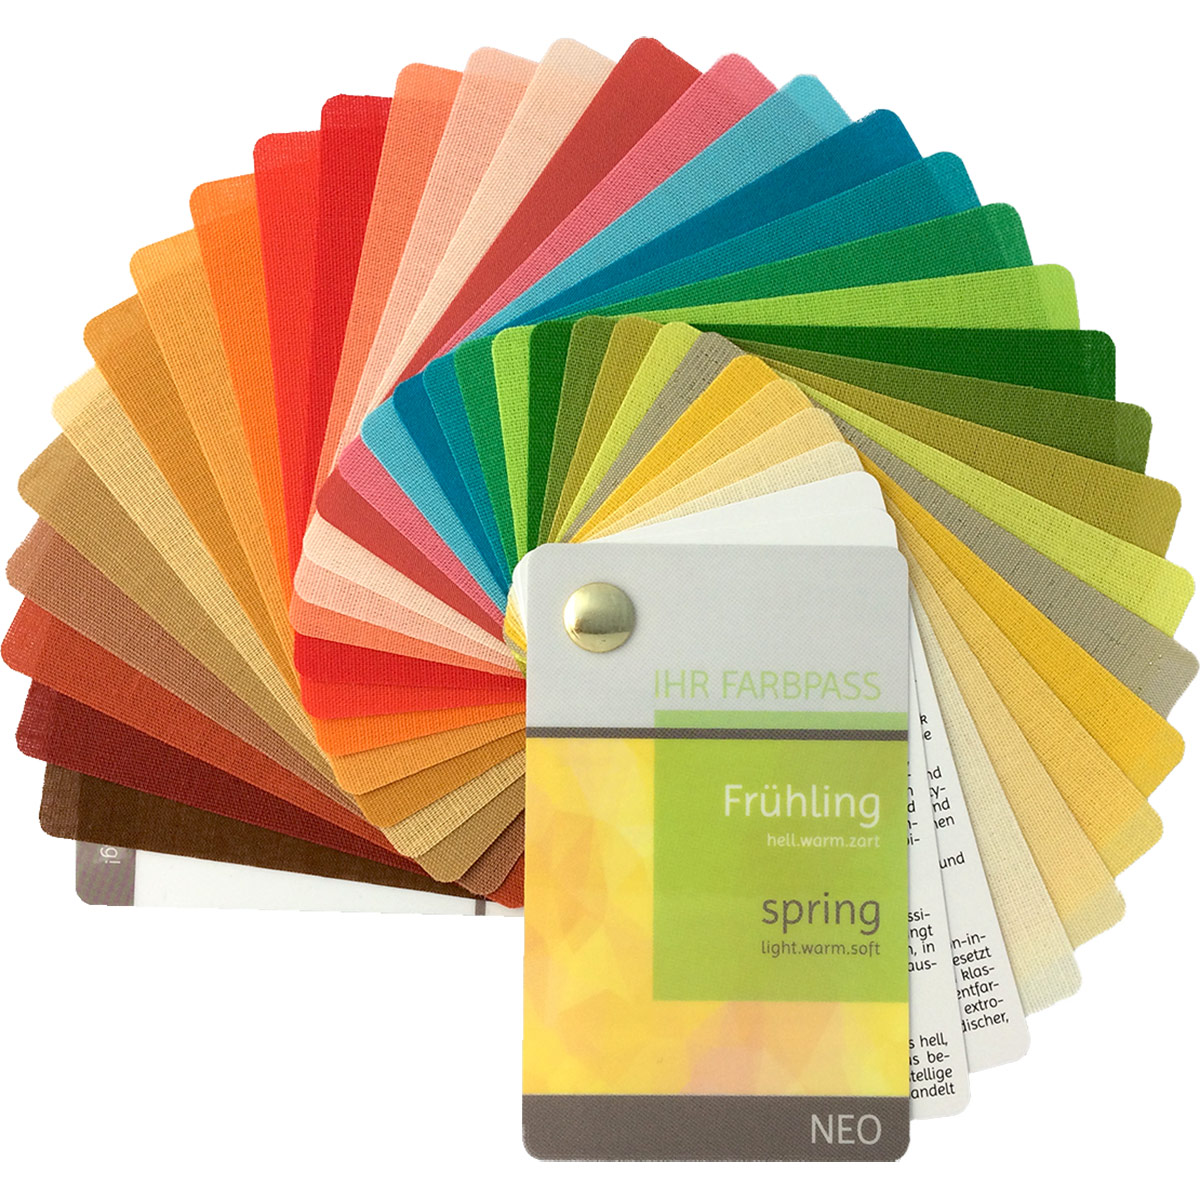 Farbpass Frühling - Neo, 30 Farben